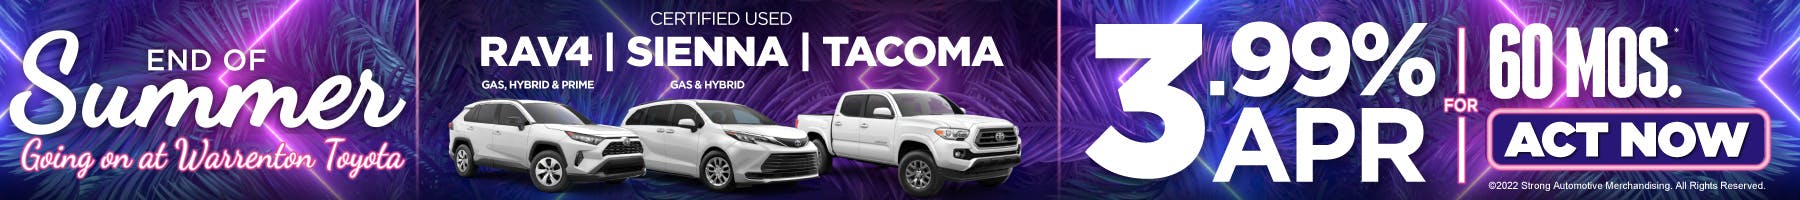 August – Used RAV4 Sienna Tacoma | Warrenton Toyota